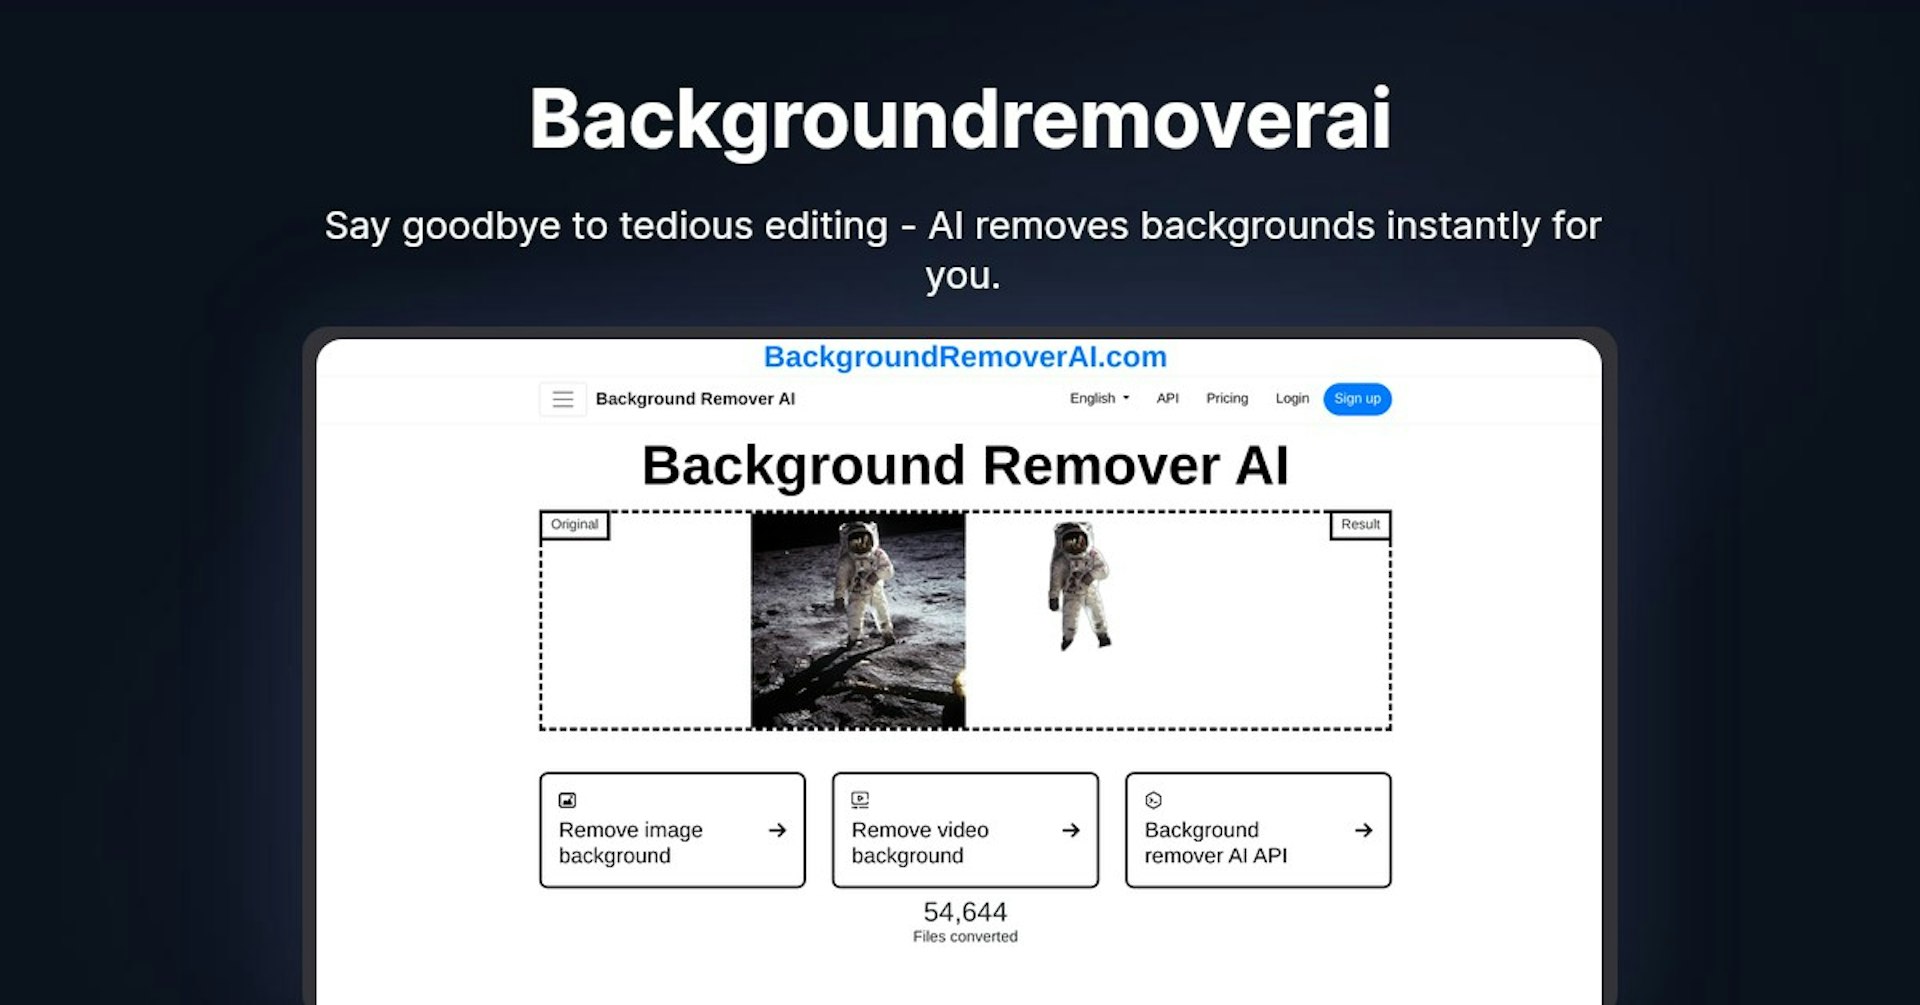 Background remover AI